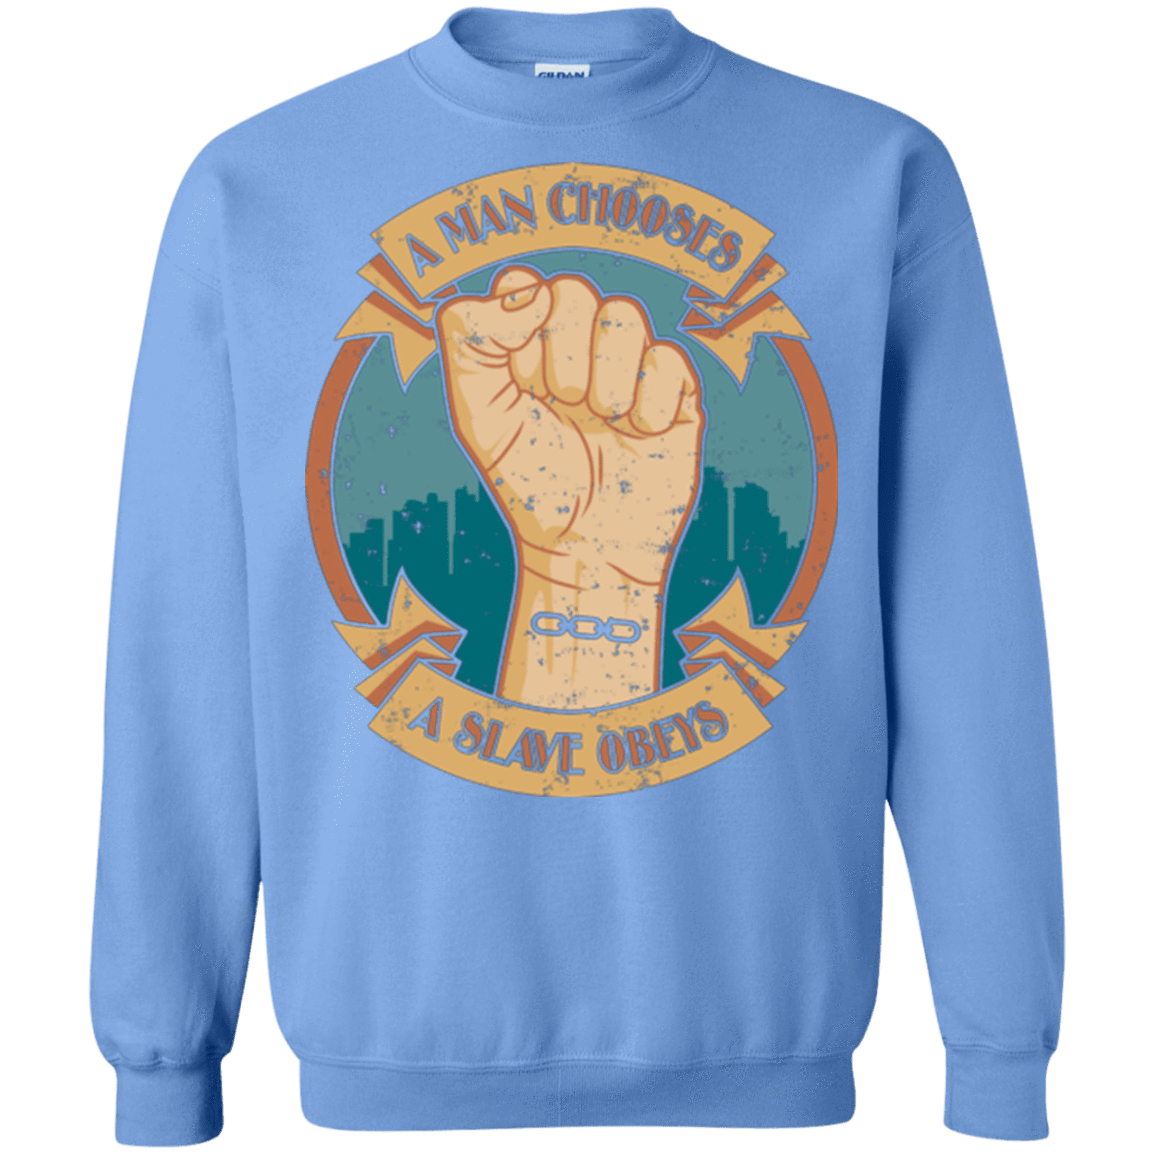 Sweatshirts Carolina Blue / Small A Man Chooses A Slave Obeys Crewneck Sweatshirt